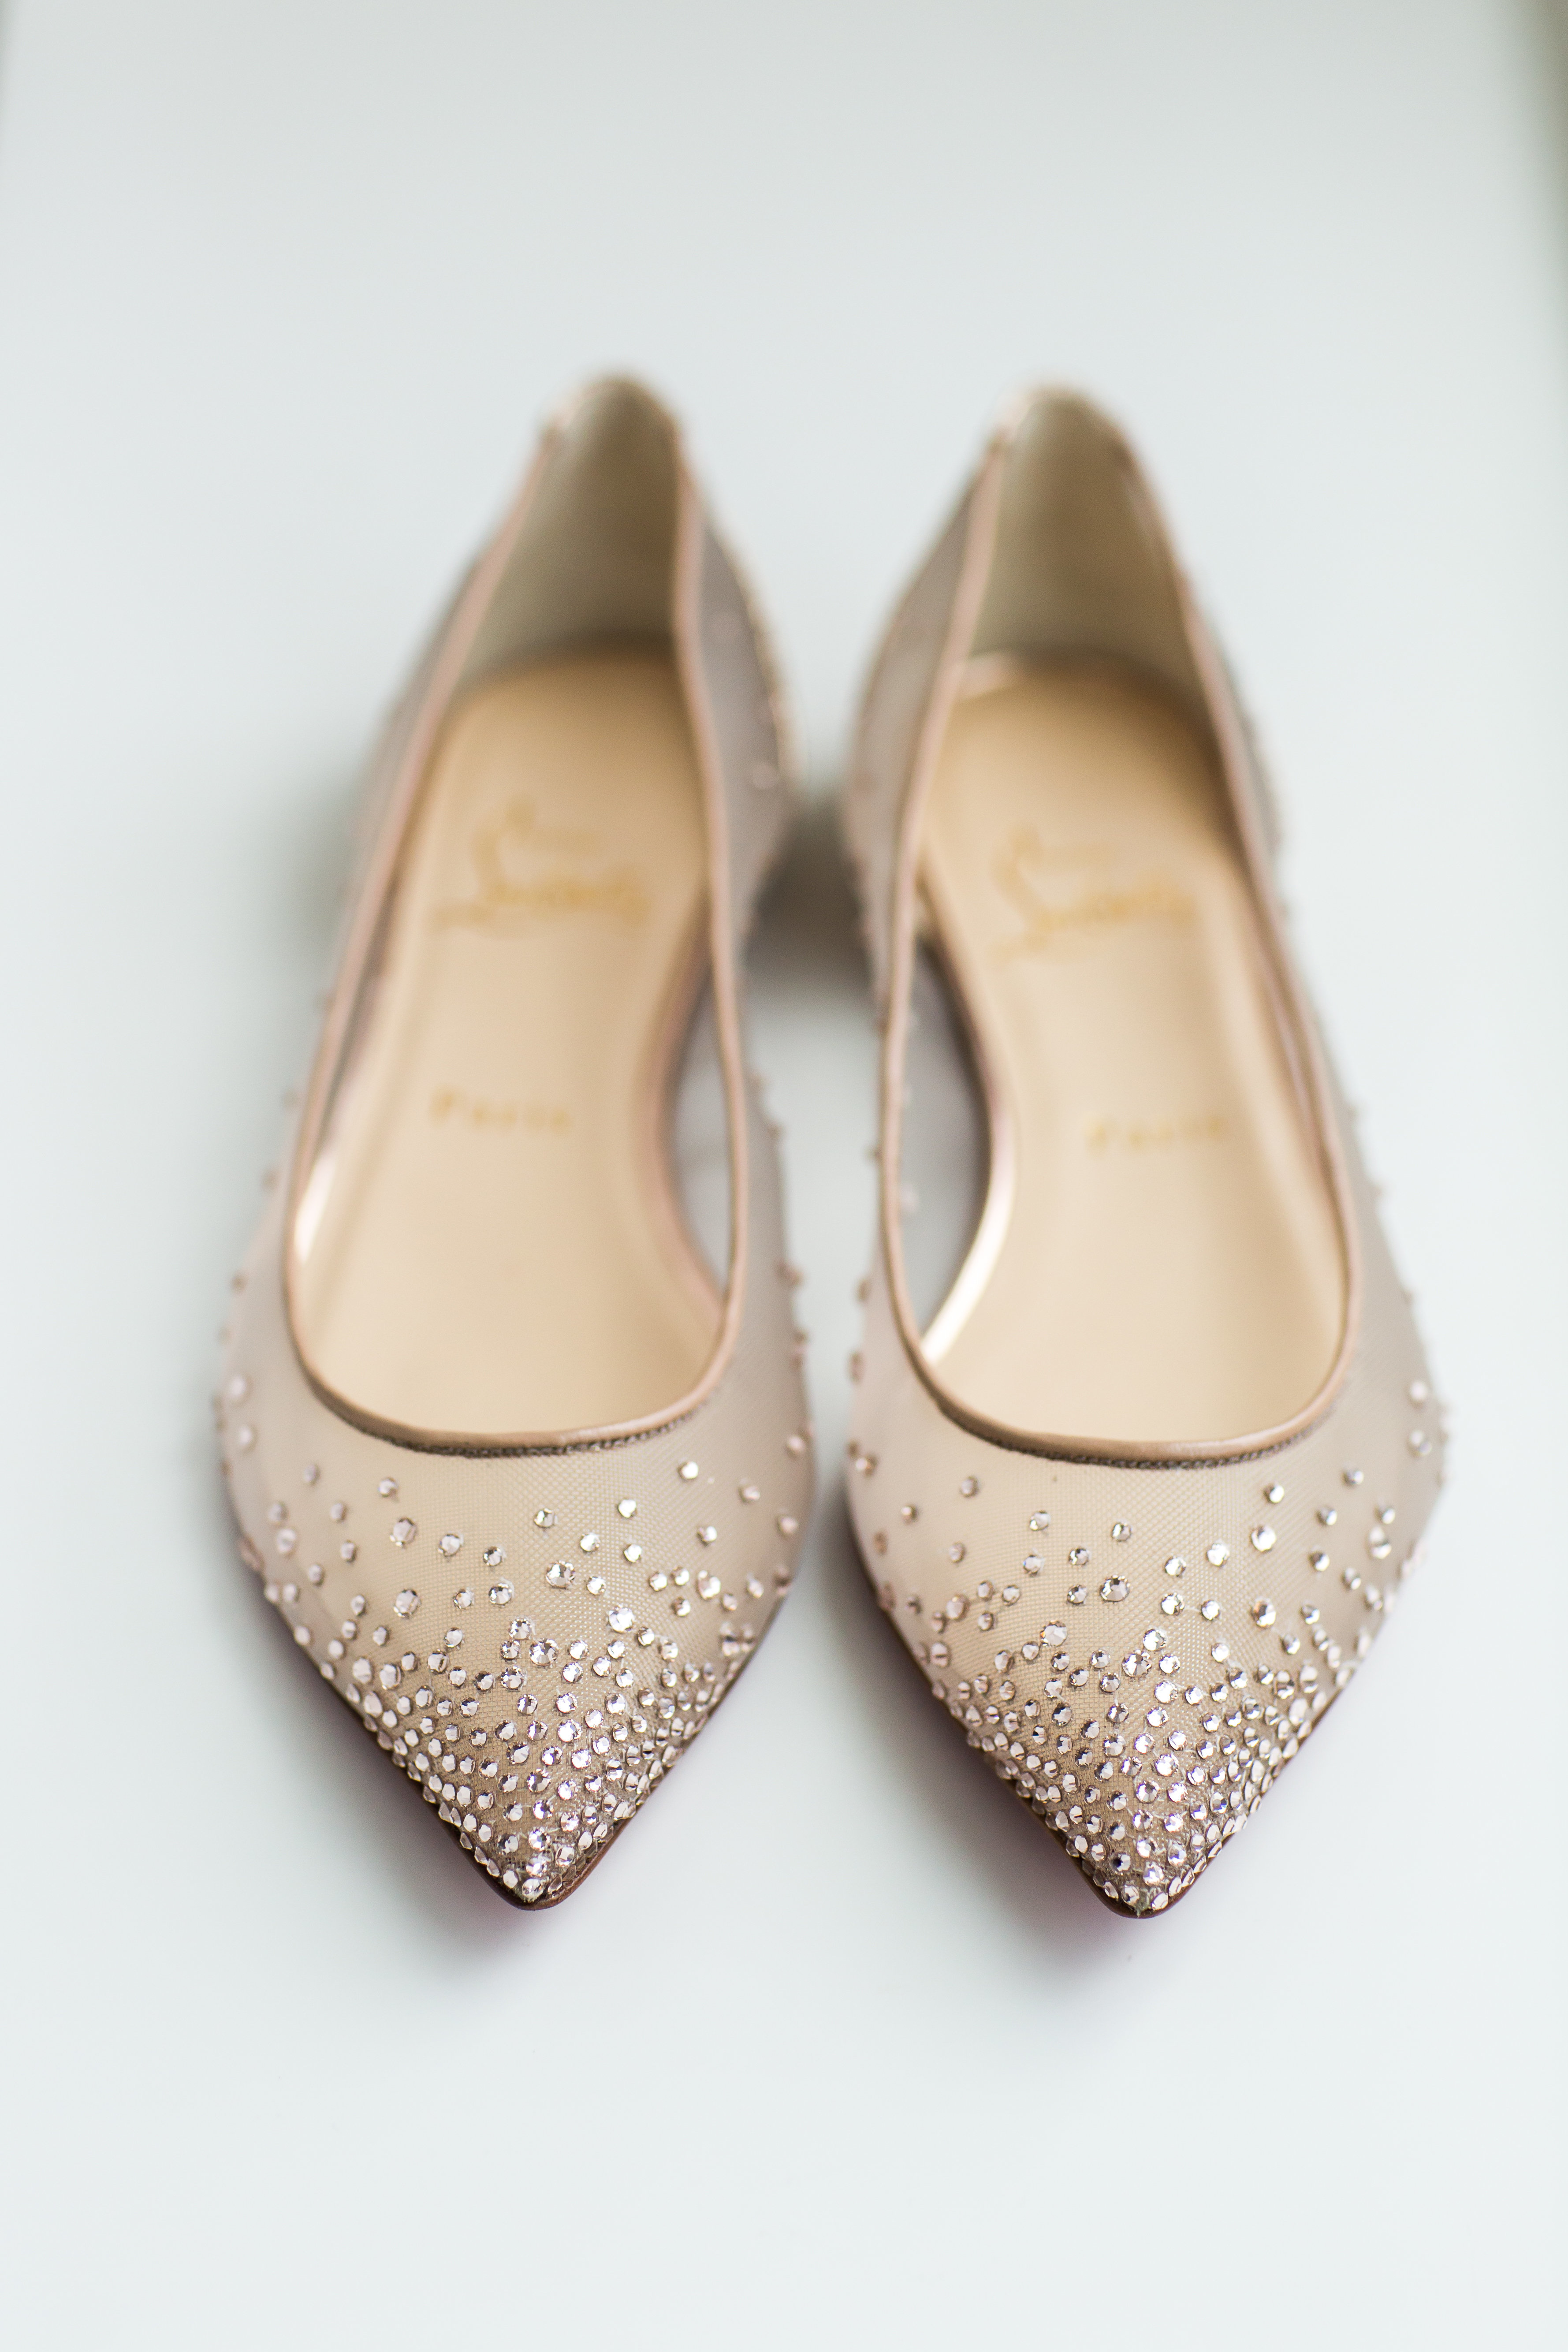 comfy bridesmaid shoes